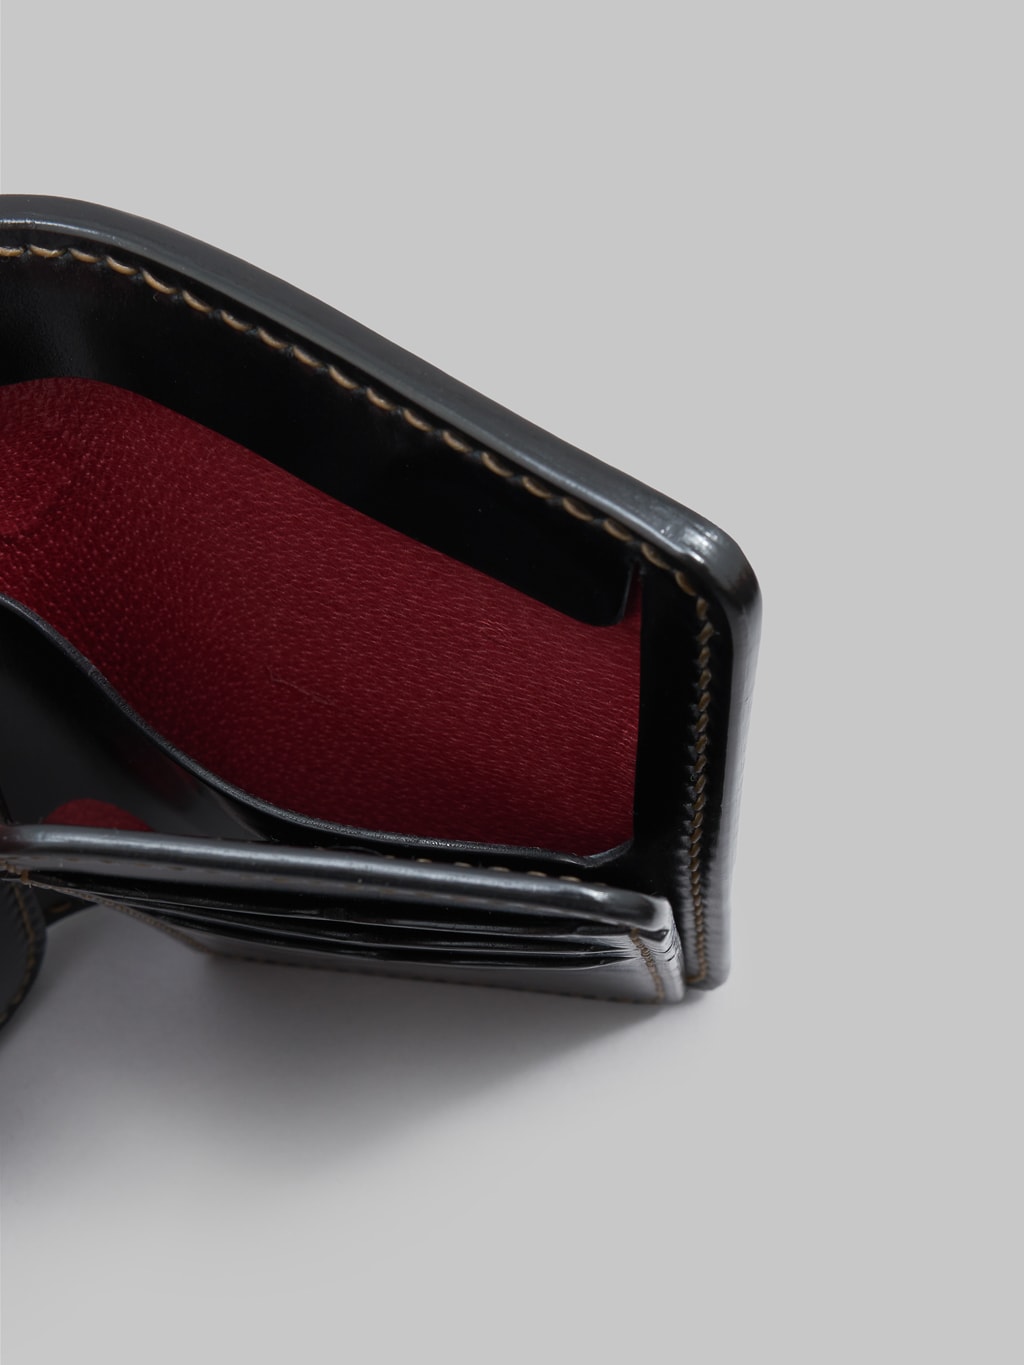 The Flat Head Handsewn Shinki Cordovan Mid Length Wallet Black  bill slot